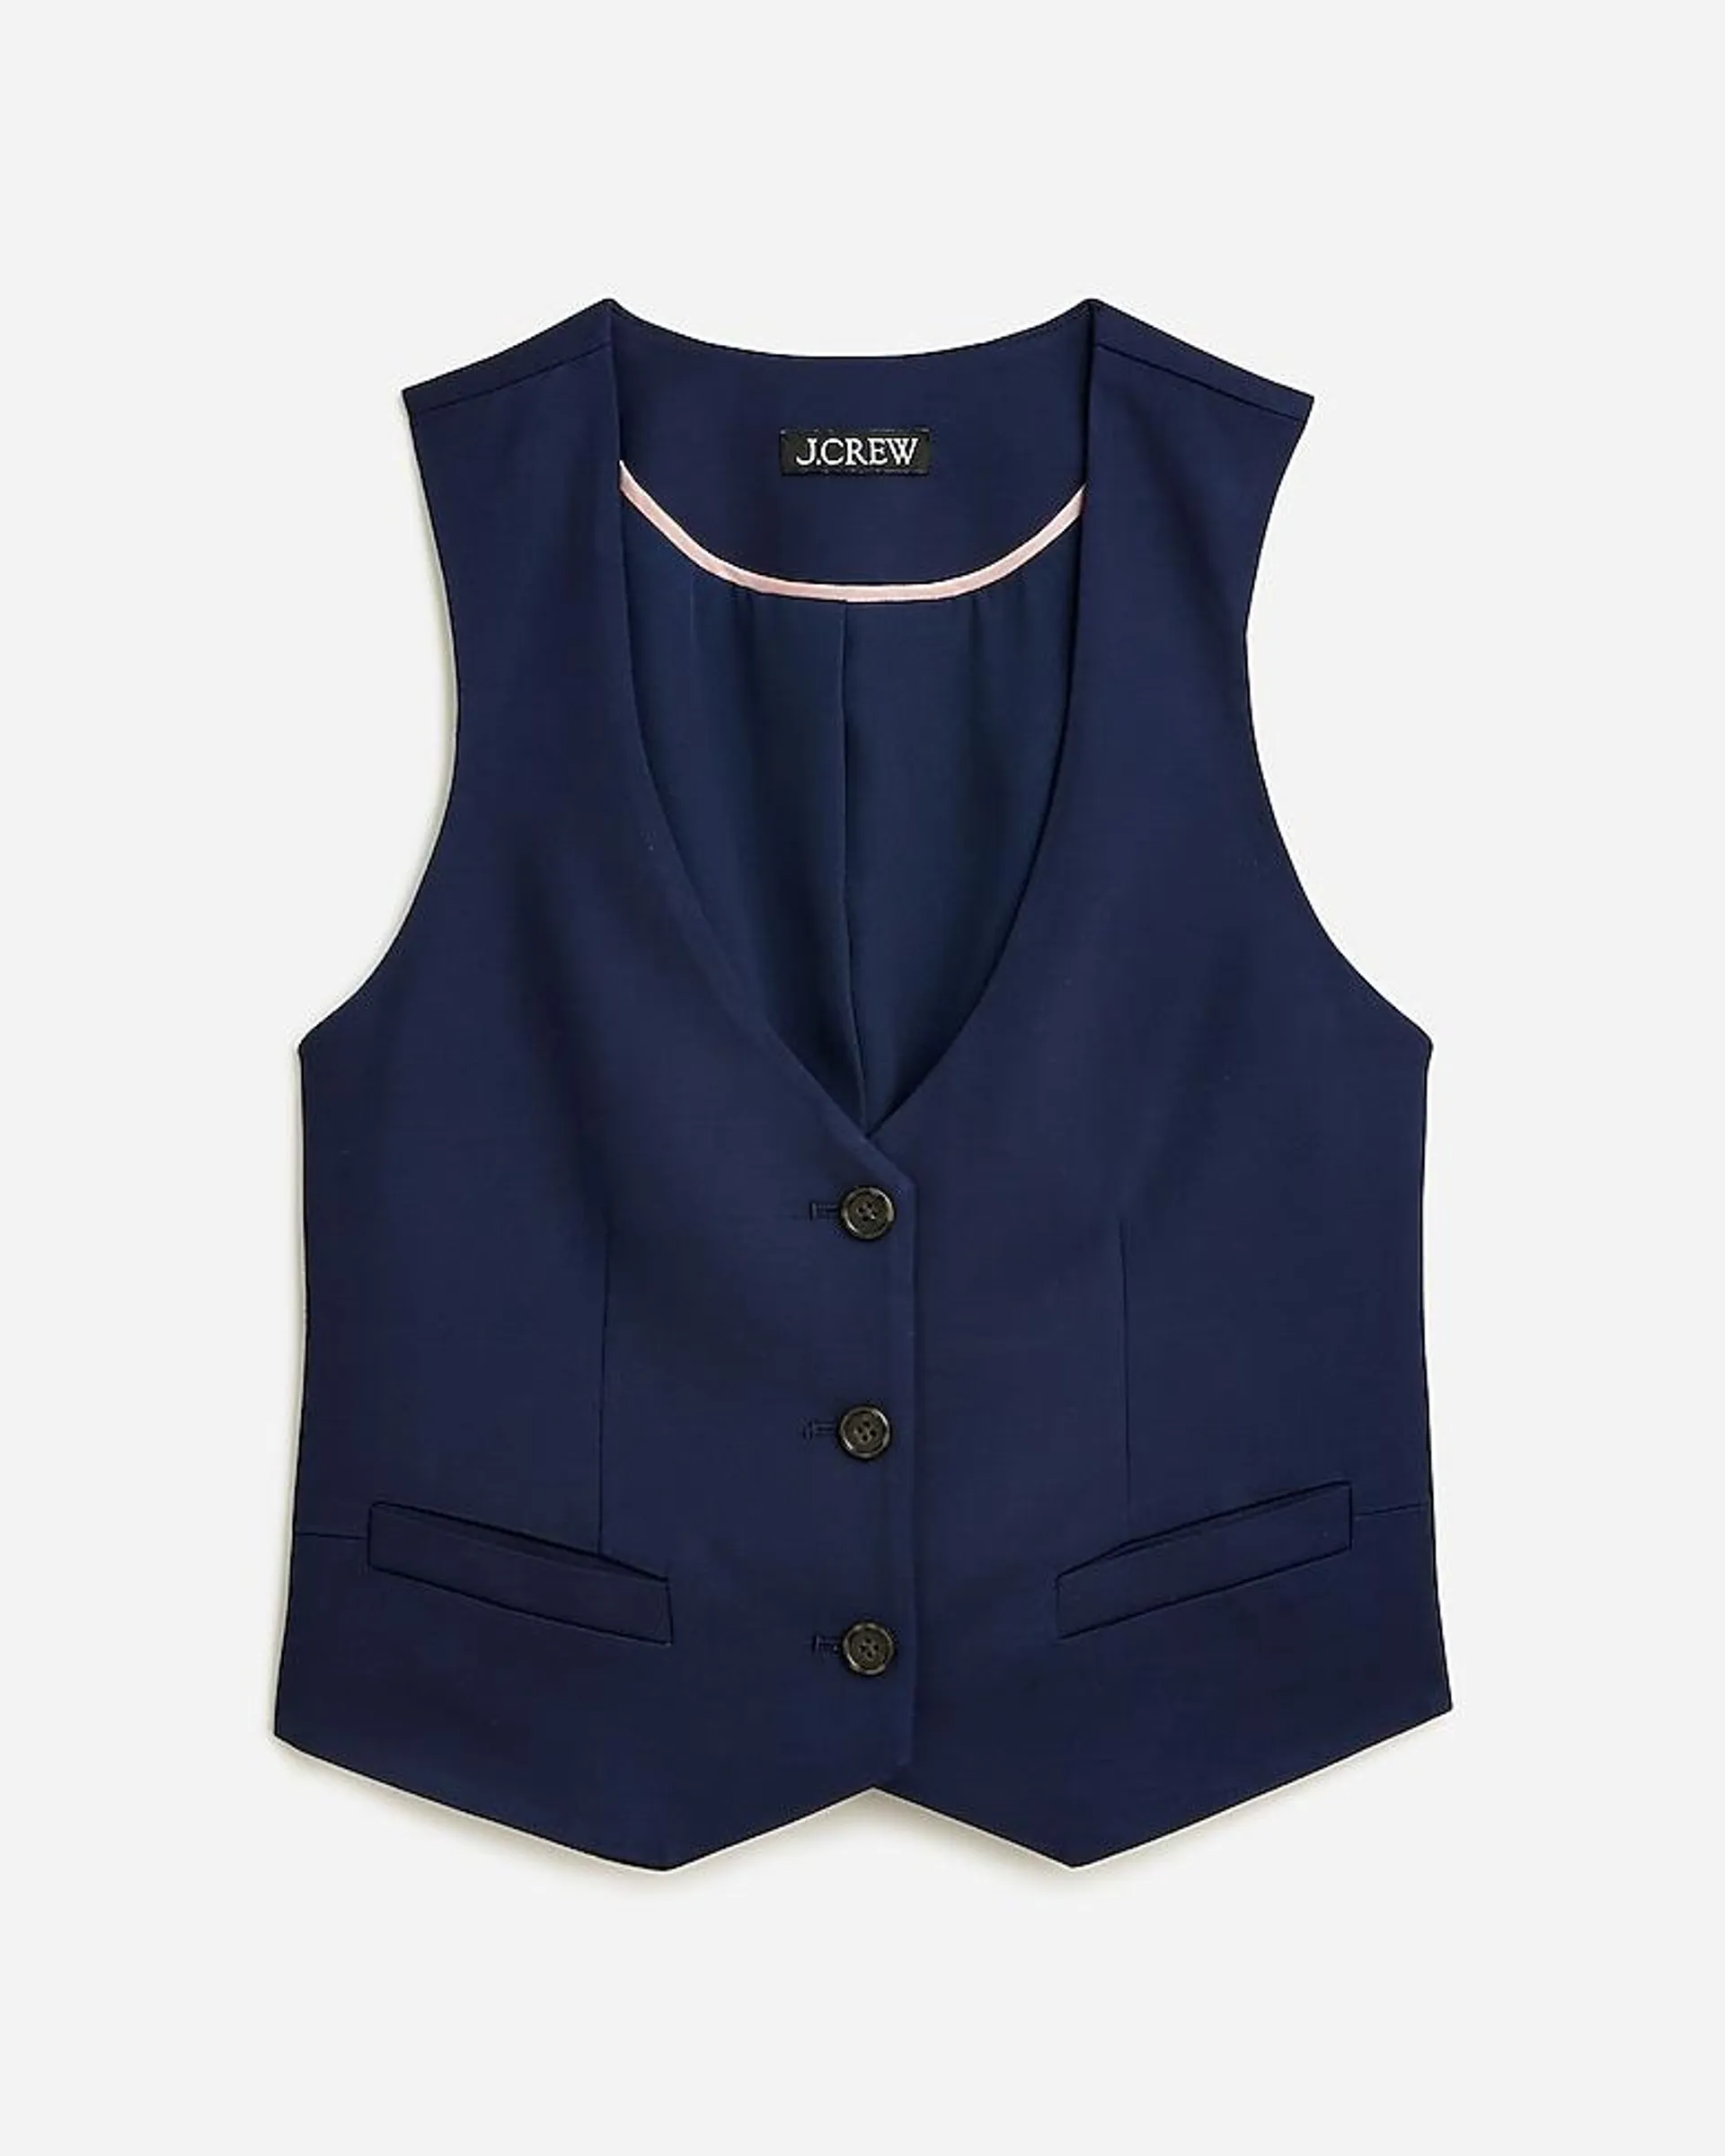 Classic-fit vest in city twill